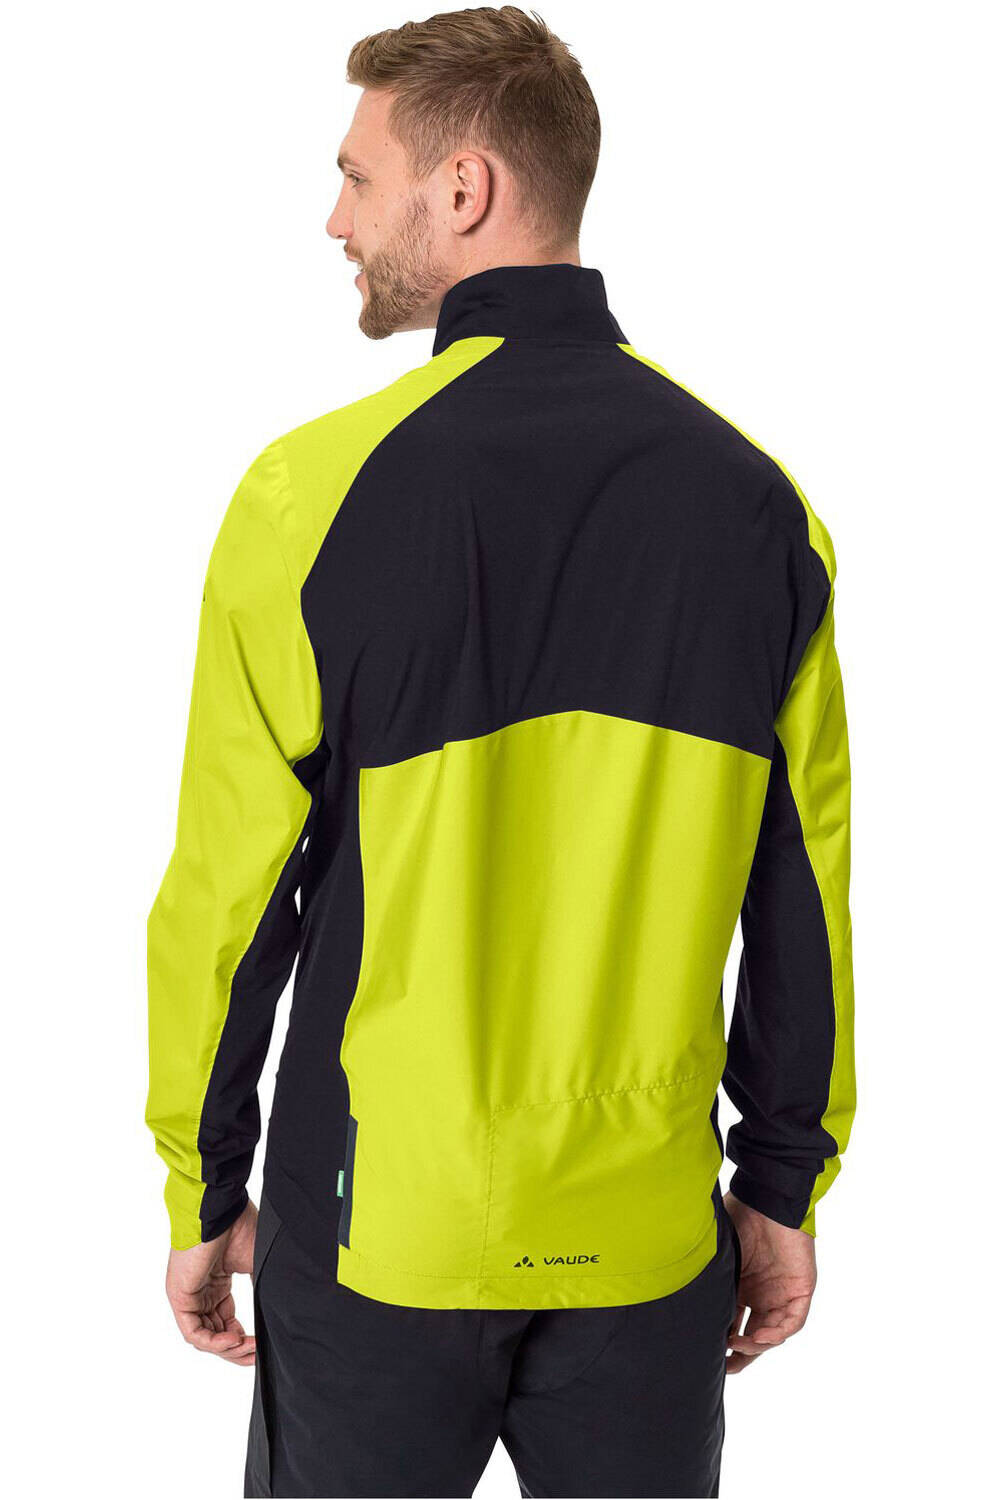 Vaude chaqueta impermeable ciclismo hombre Men's Kuro Rain Jacket vista trasera